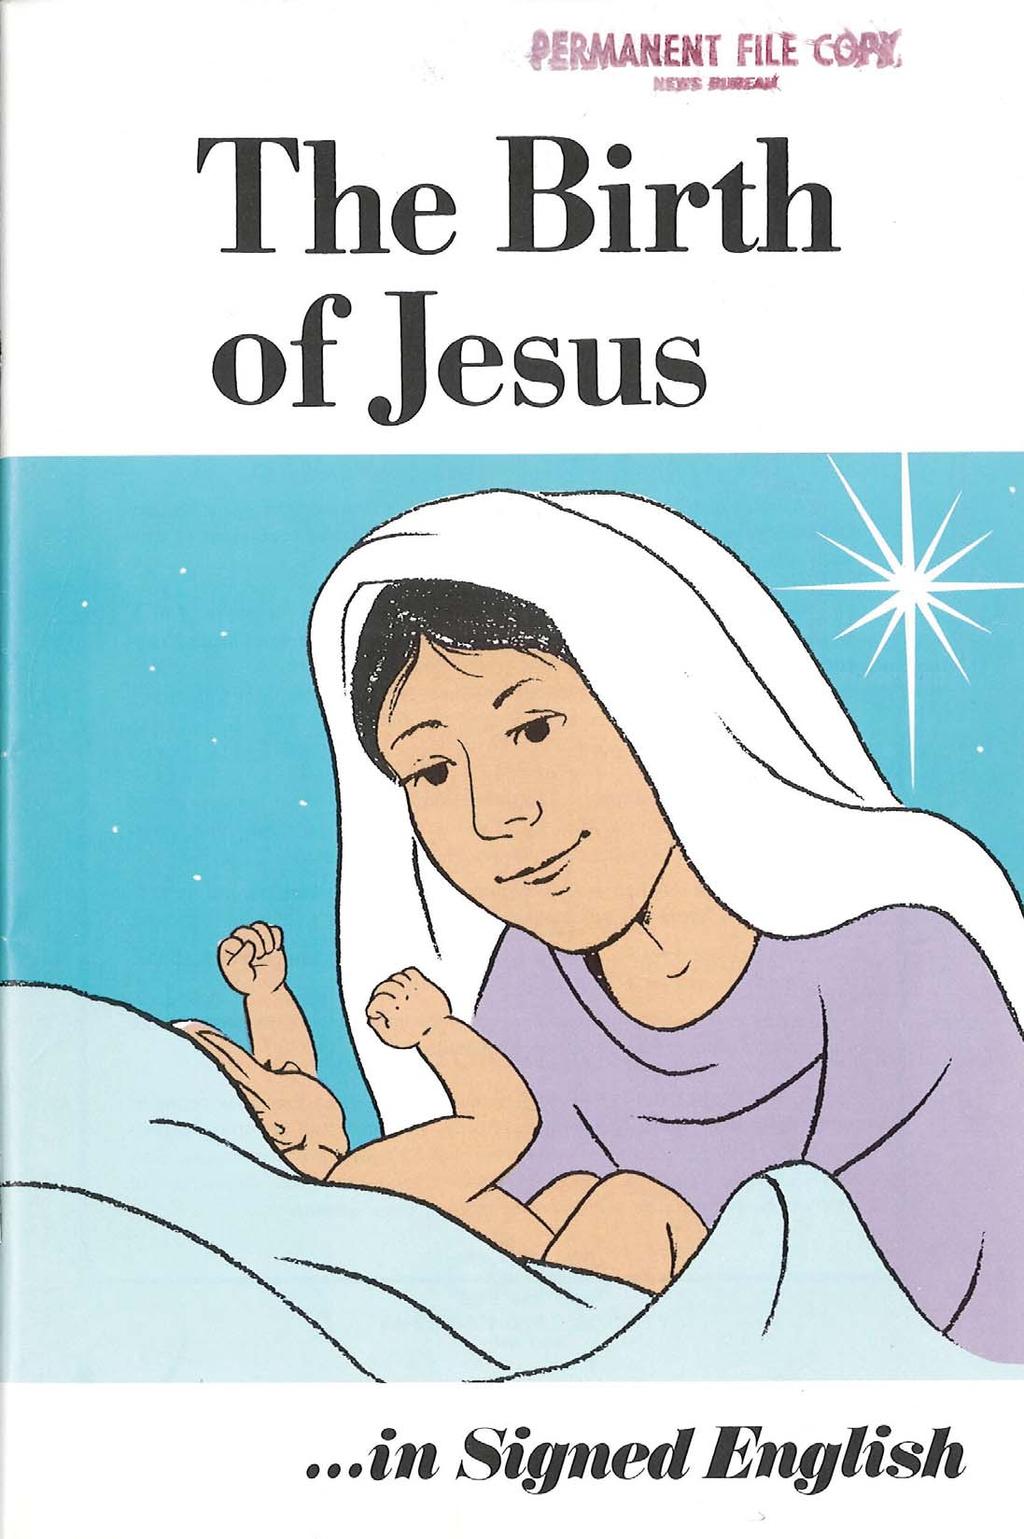 The Birth of Jesus.